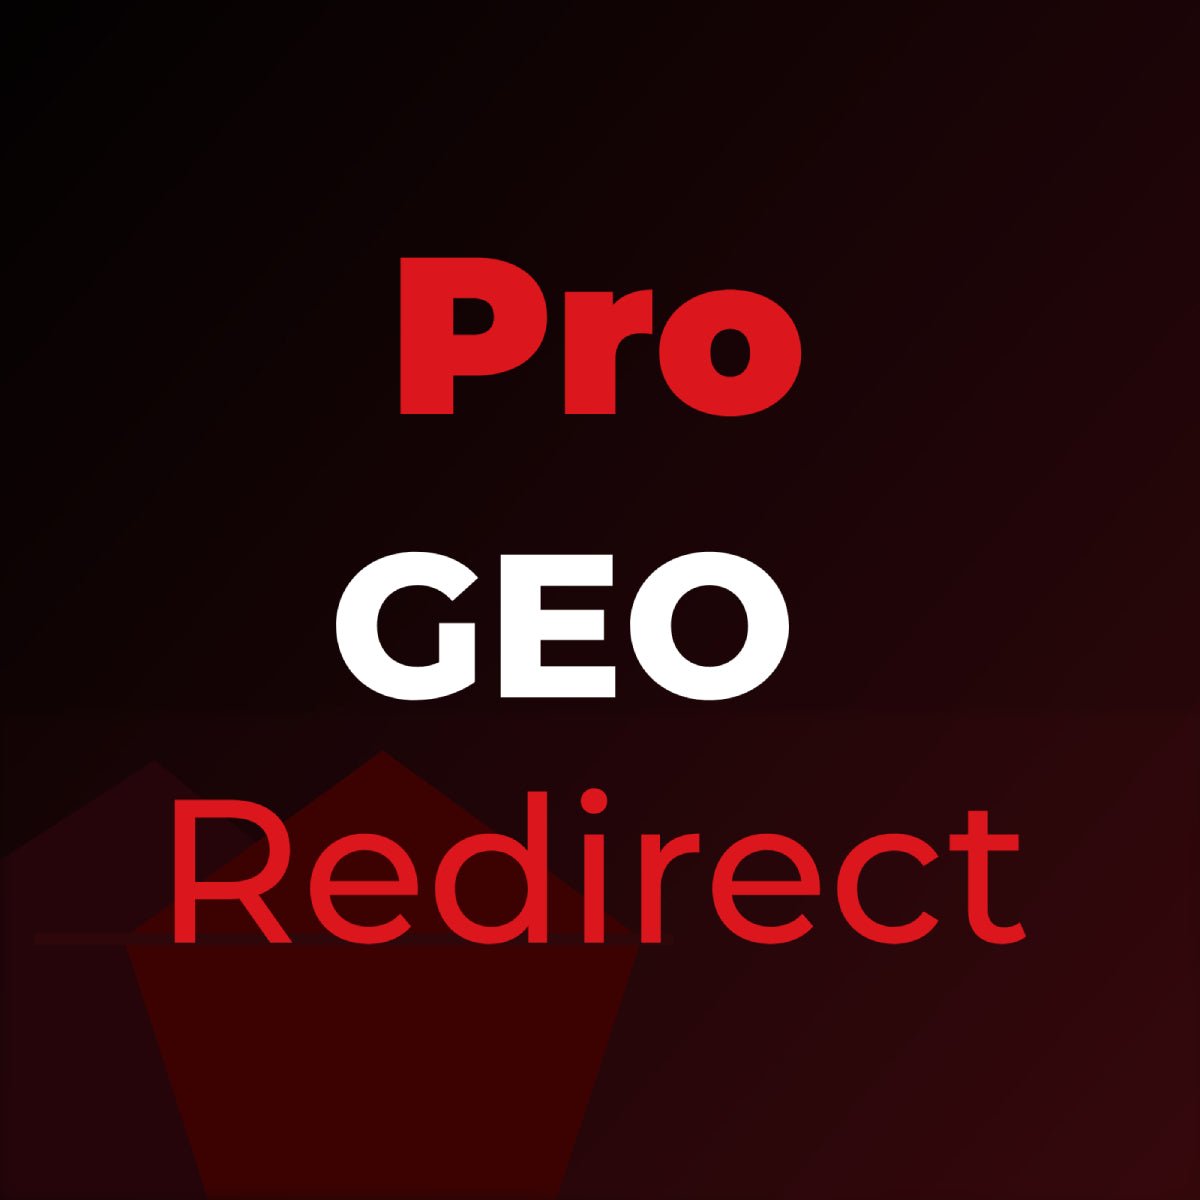 Pro Geo Redirect Shopify App